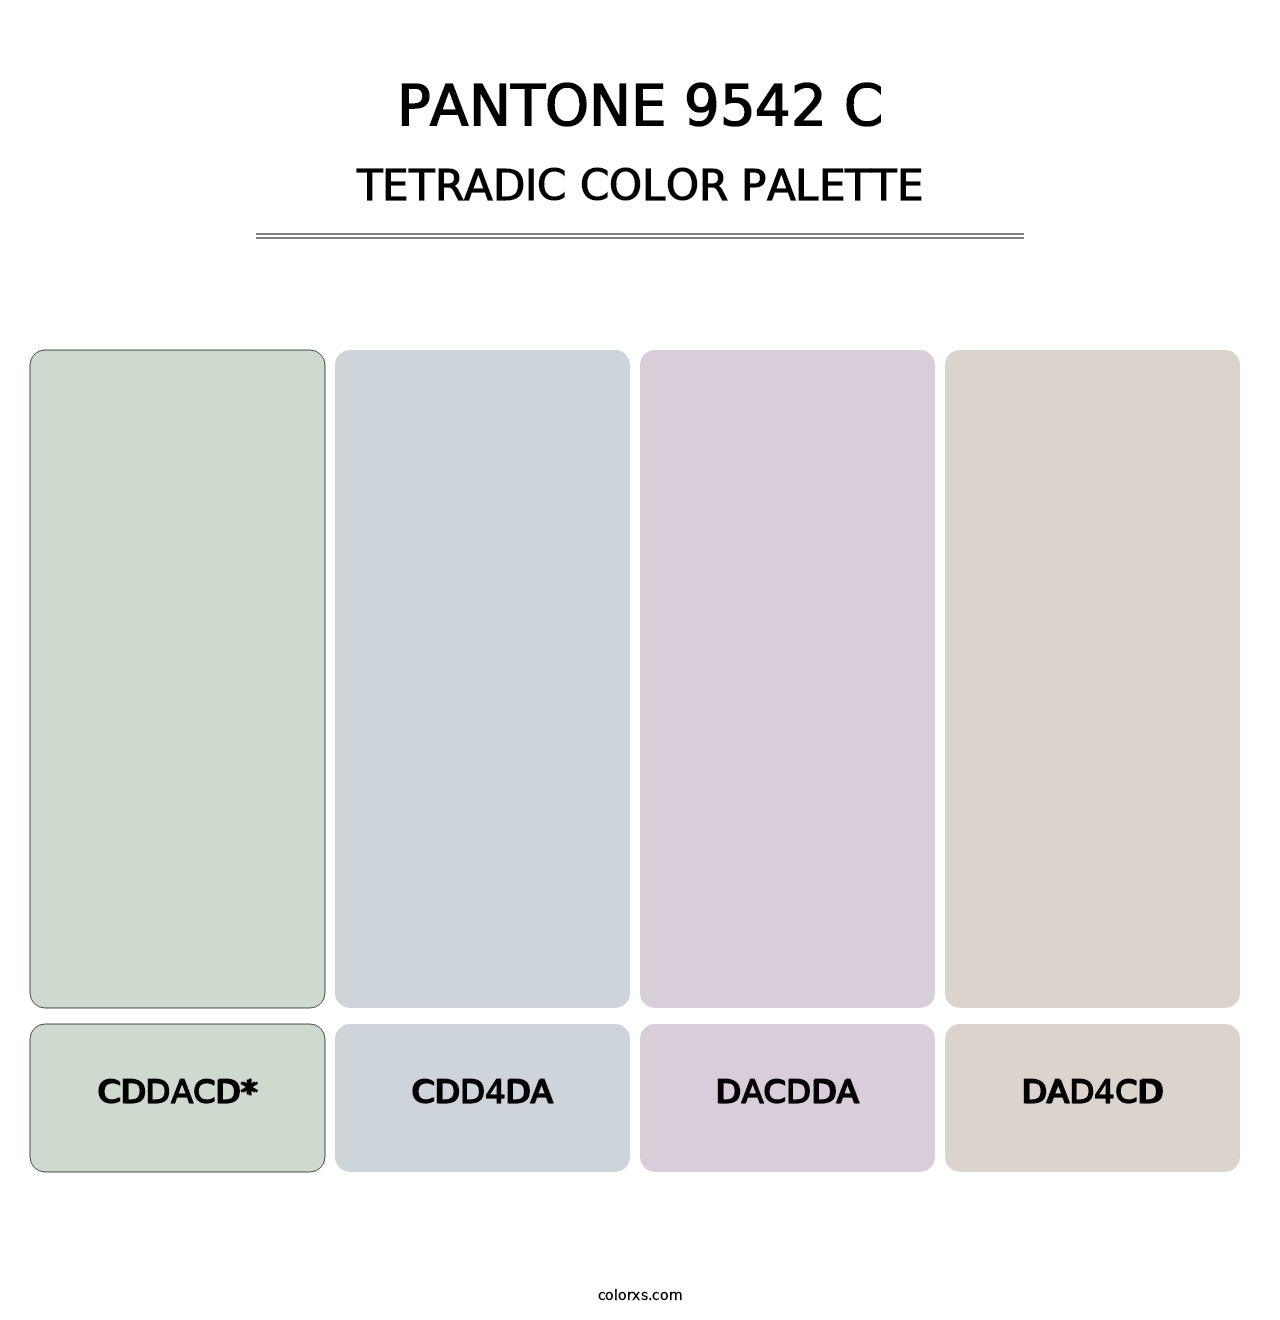 PANTONE 9542 C - Tetradic Color Palette